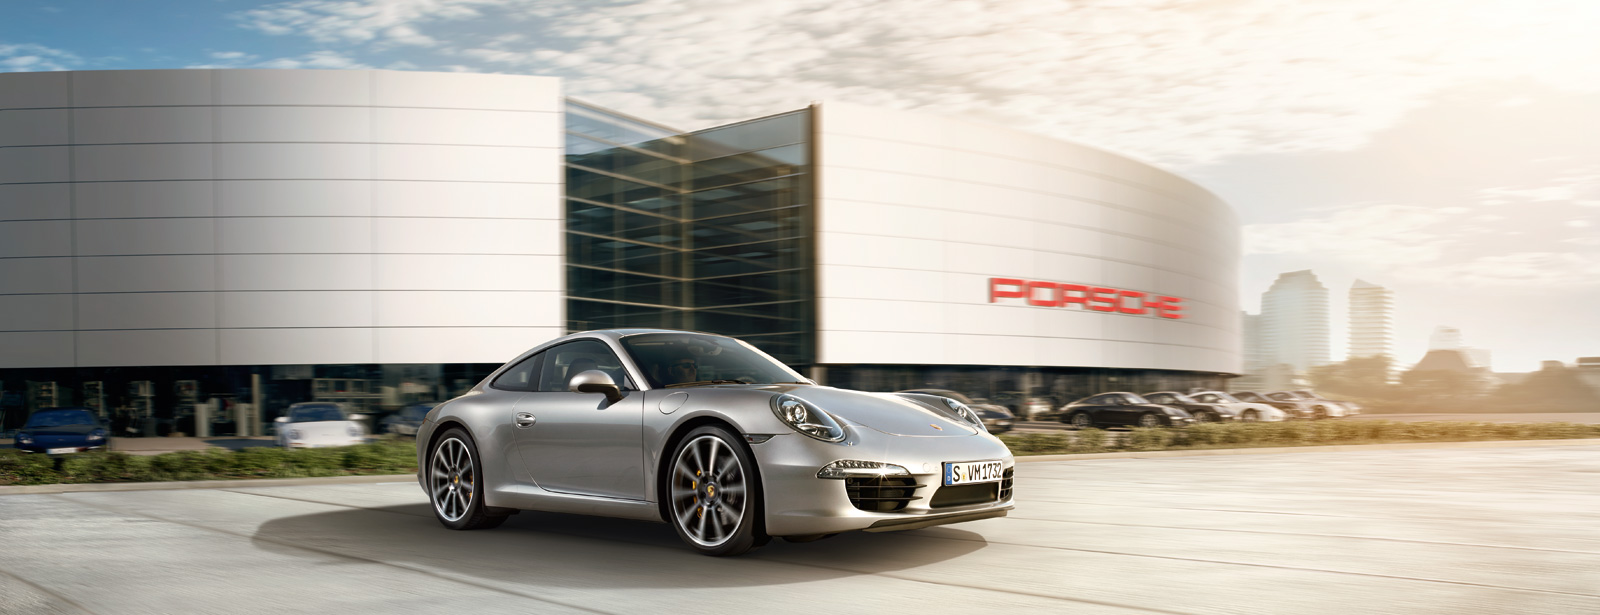 Partner Porsche